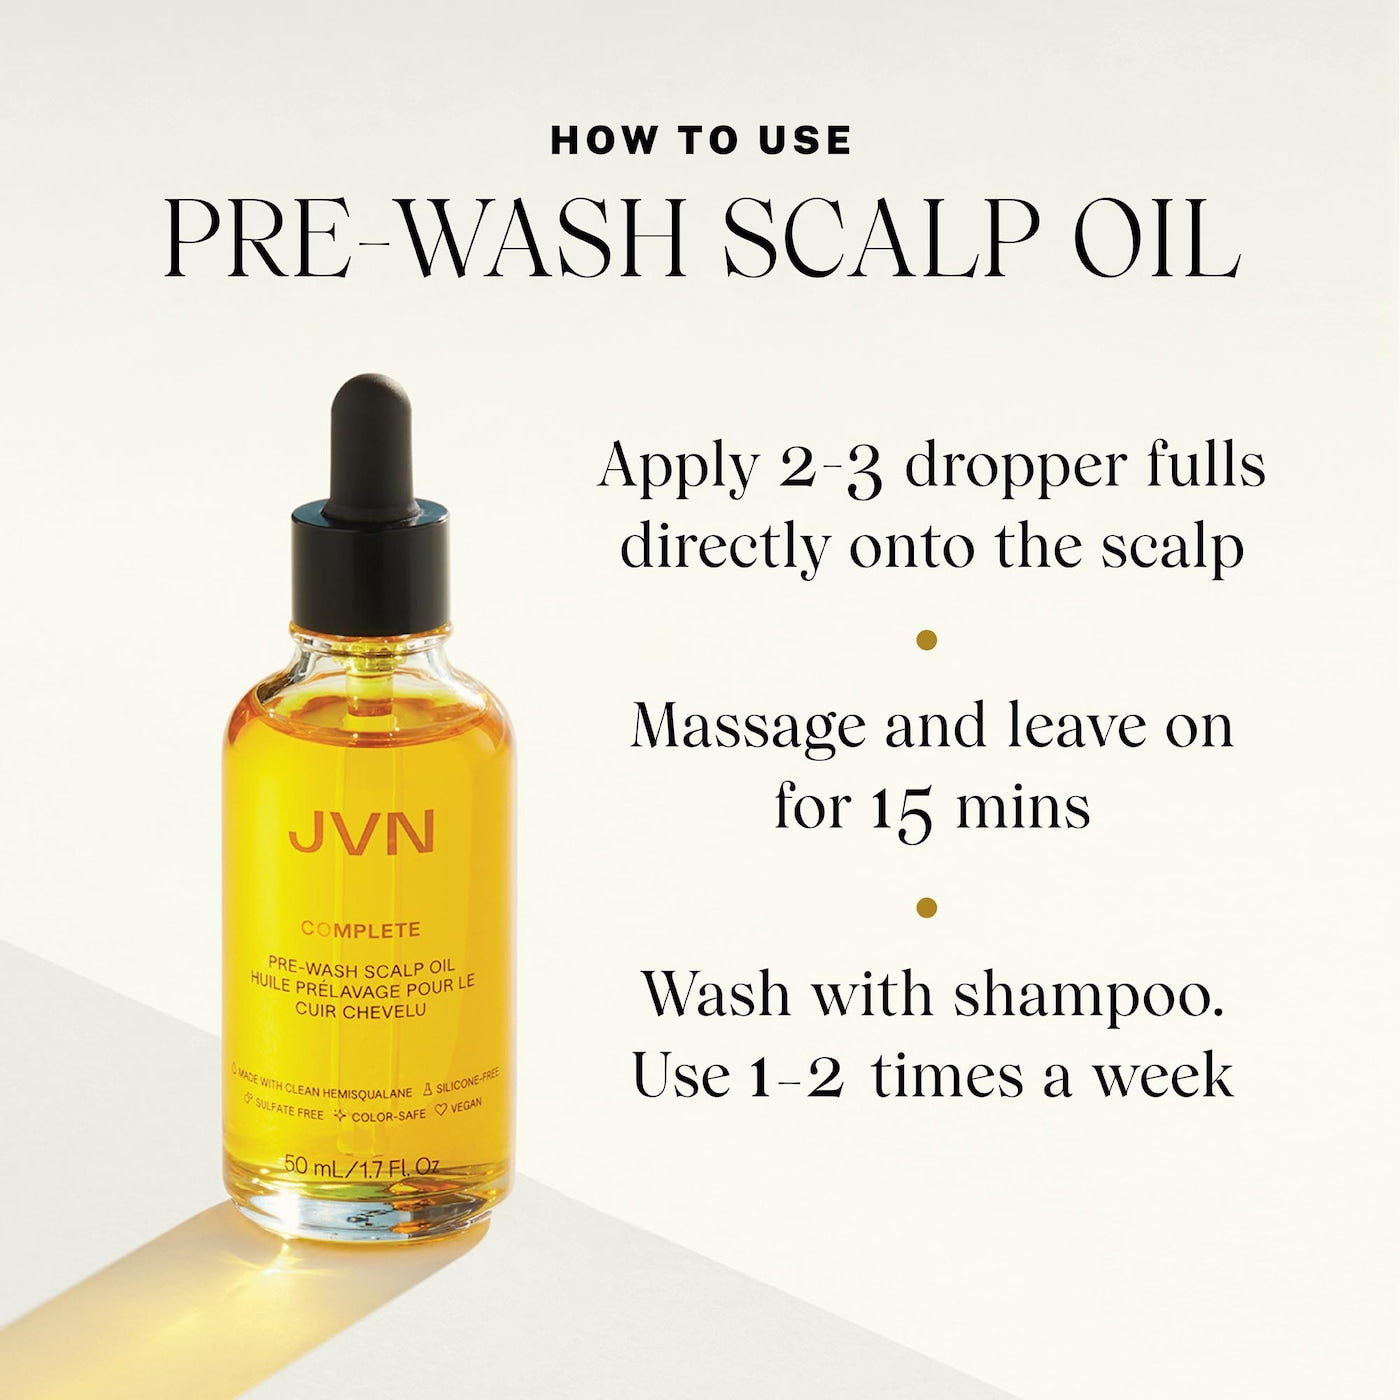 PREORDEN JVN - Complete Pre-Wash Scalp & Hair Treatment Oil